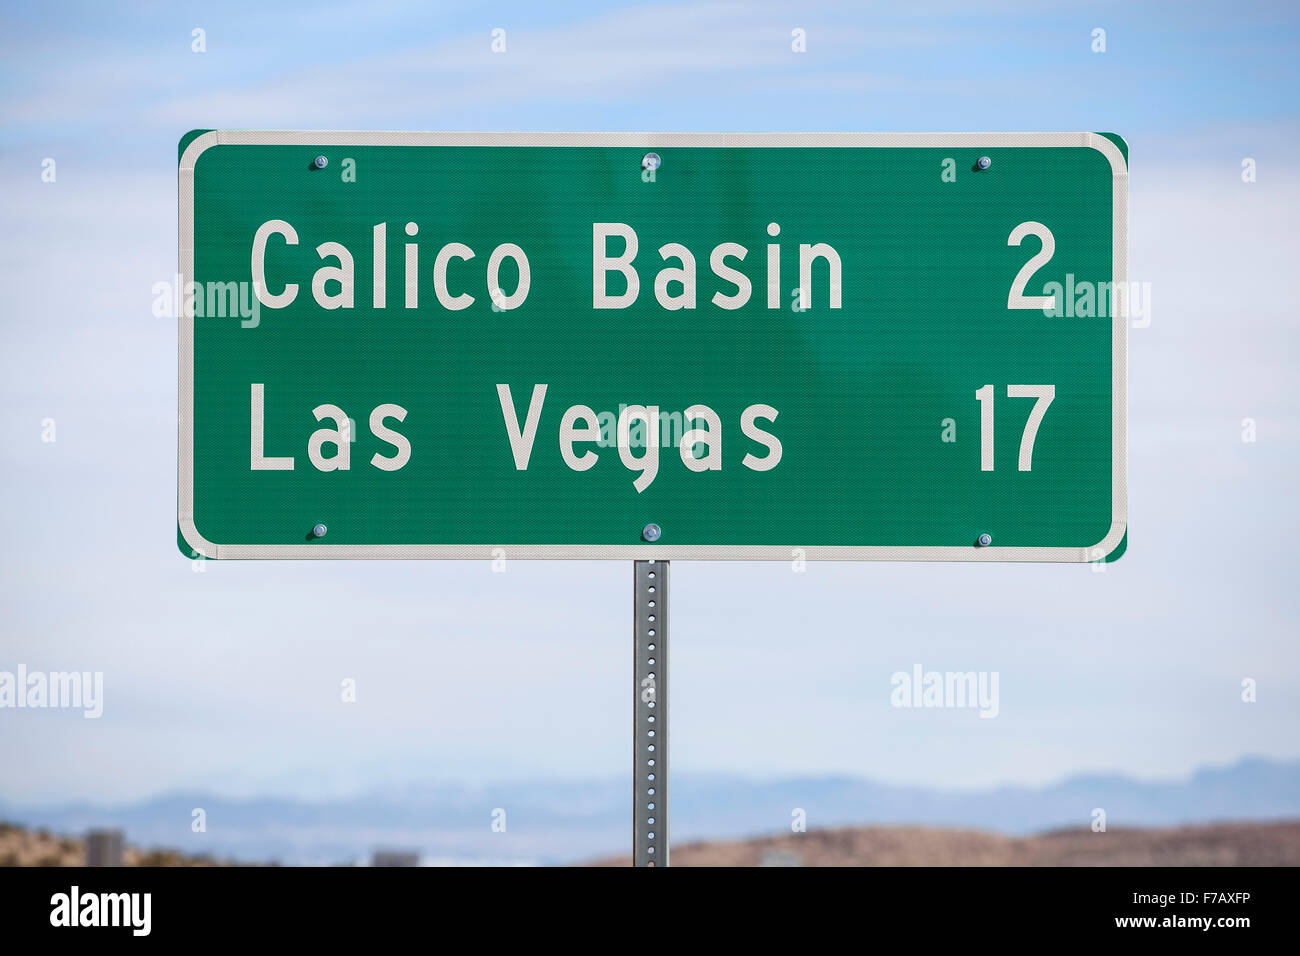 Las Vegas seventeen miles highway sign. Stock Photo